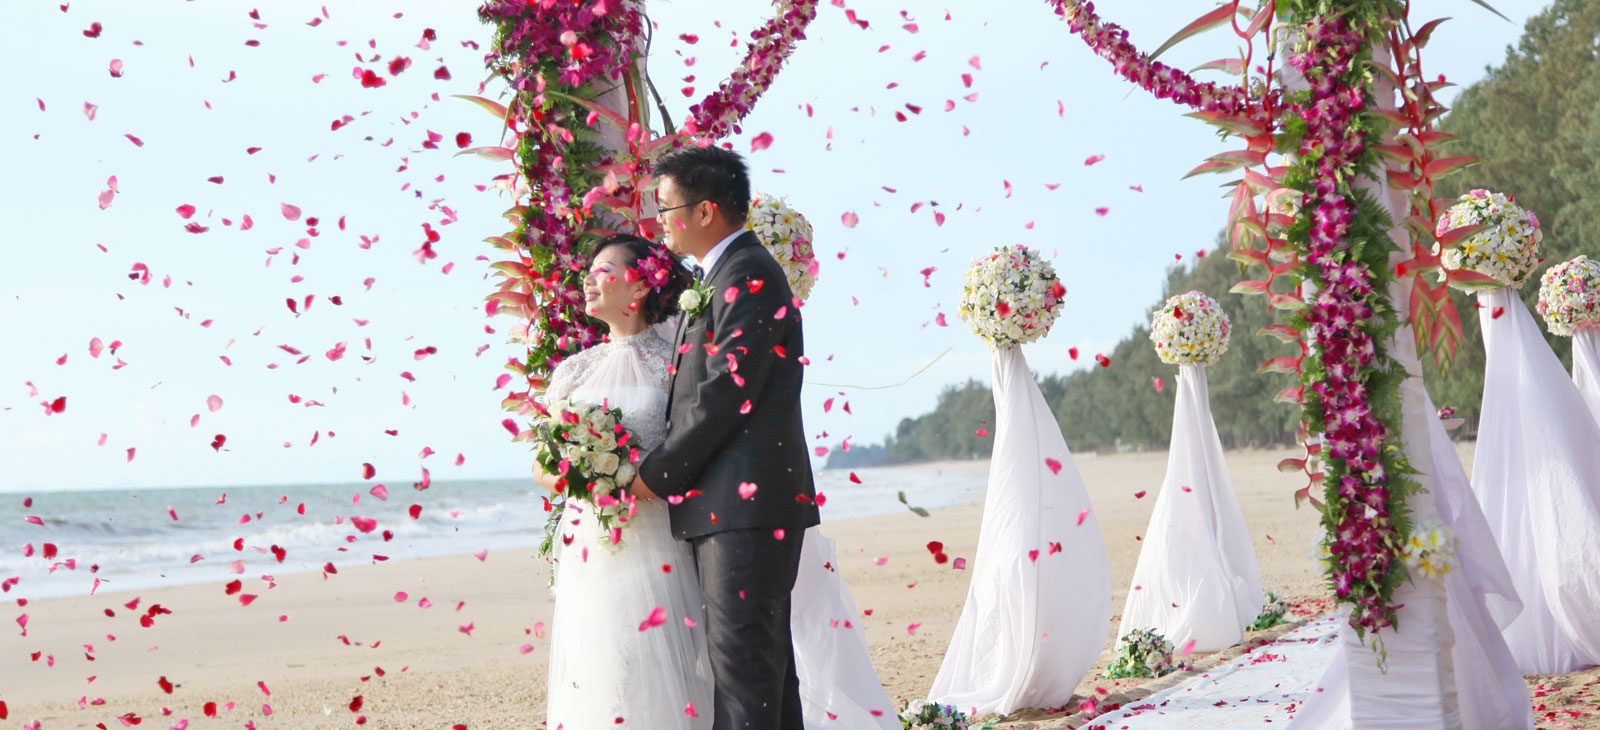 Wedding on the beach in Thailand